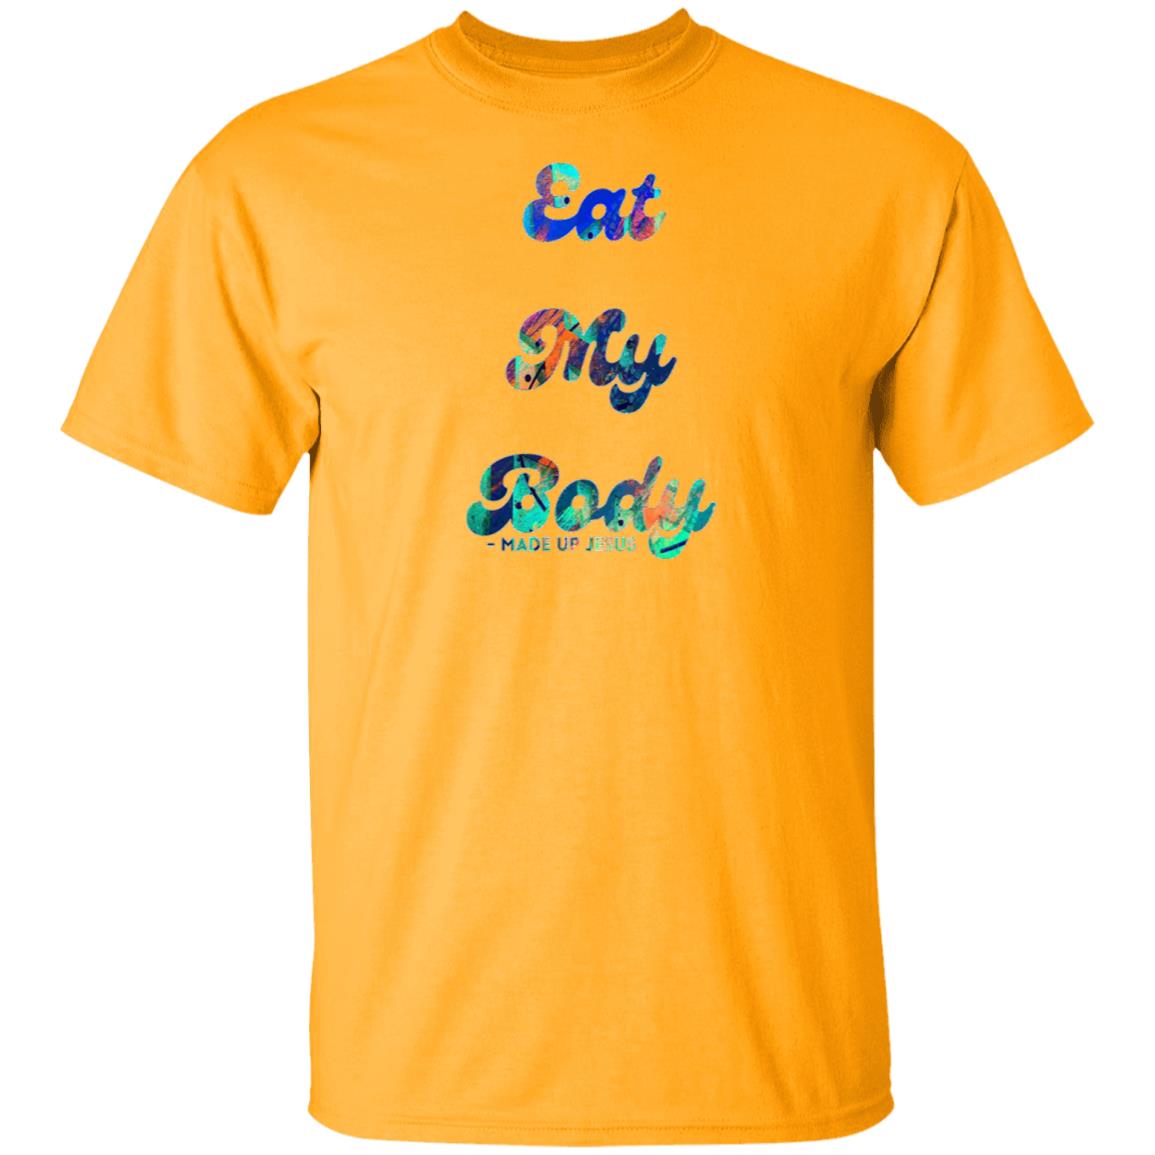 Gavin Scott EAT MY BODY T-Shirt (Genderless S-6XL)